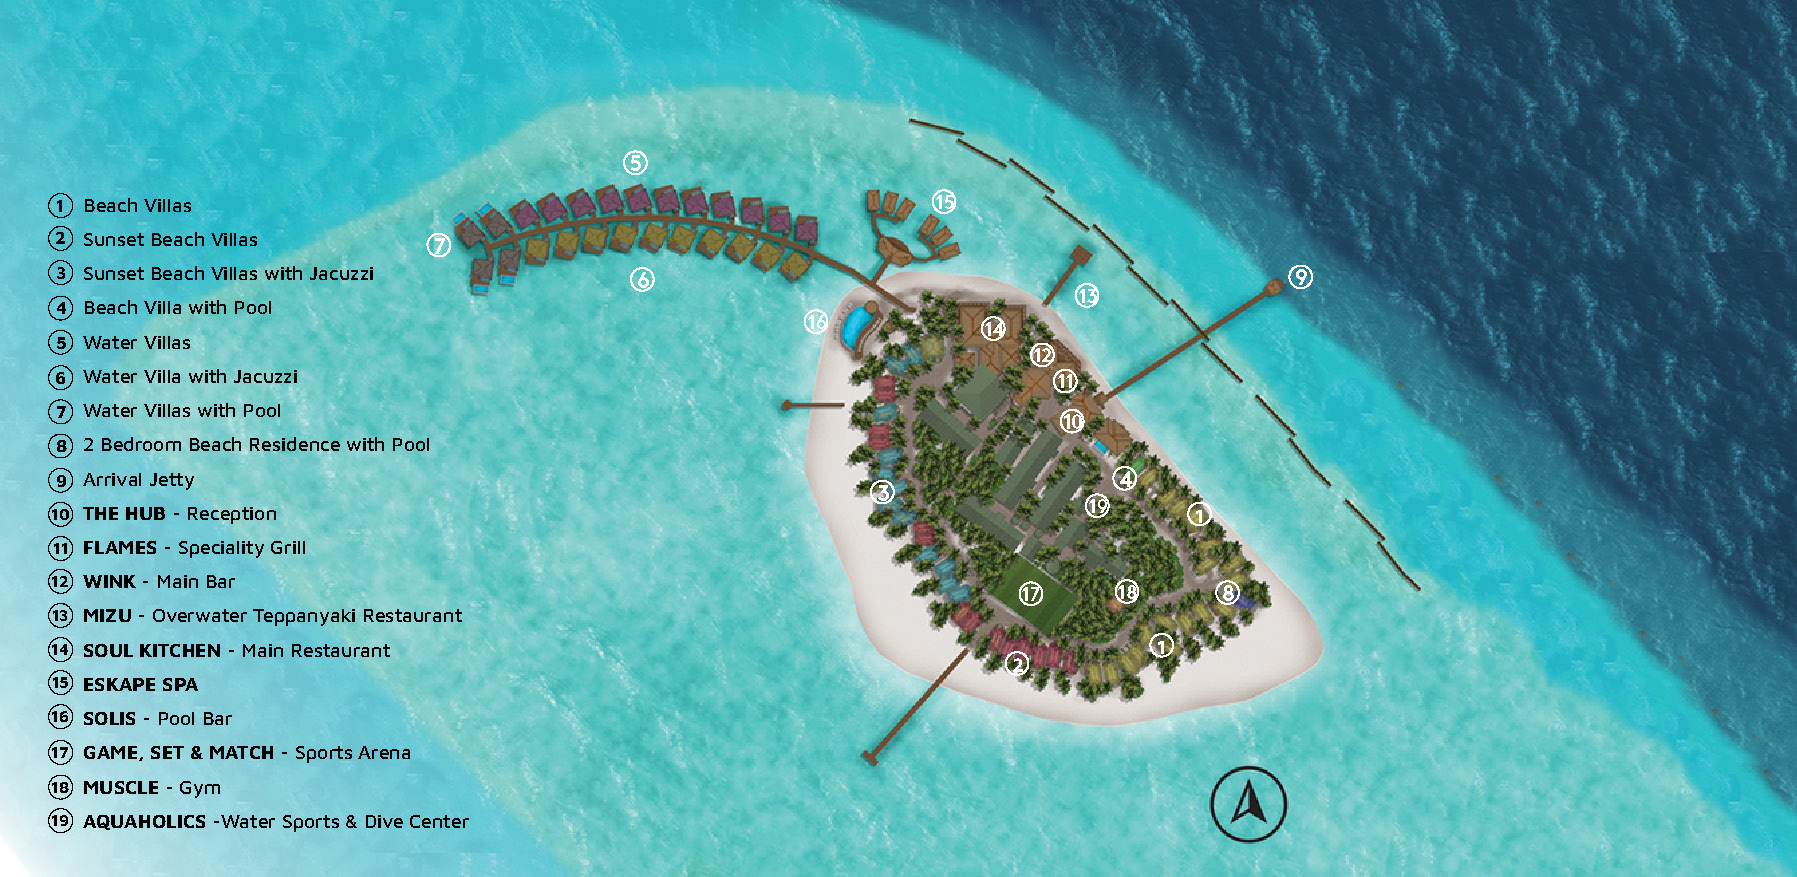 Nova maldives